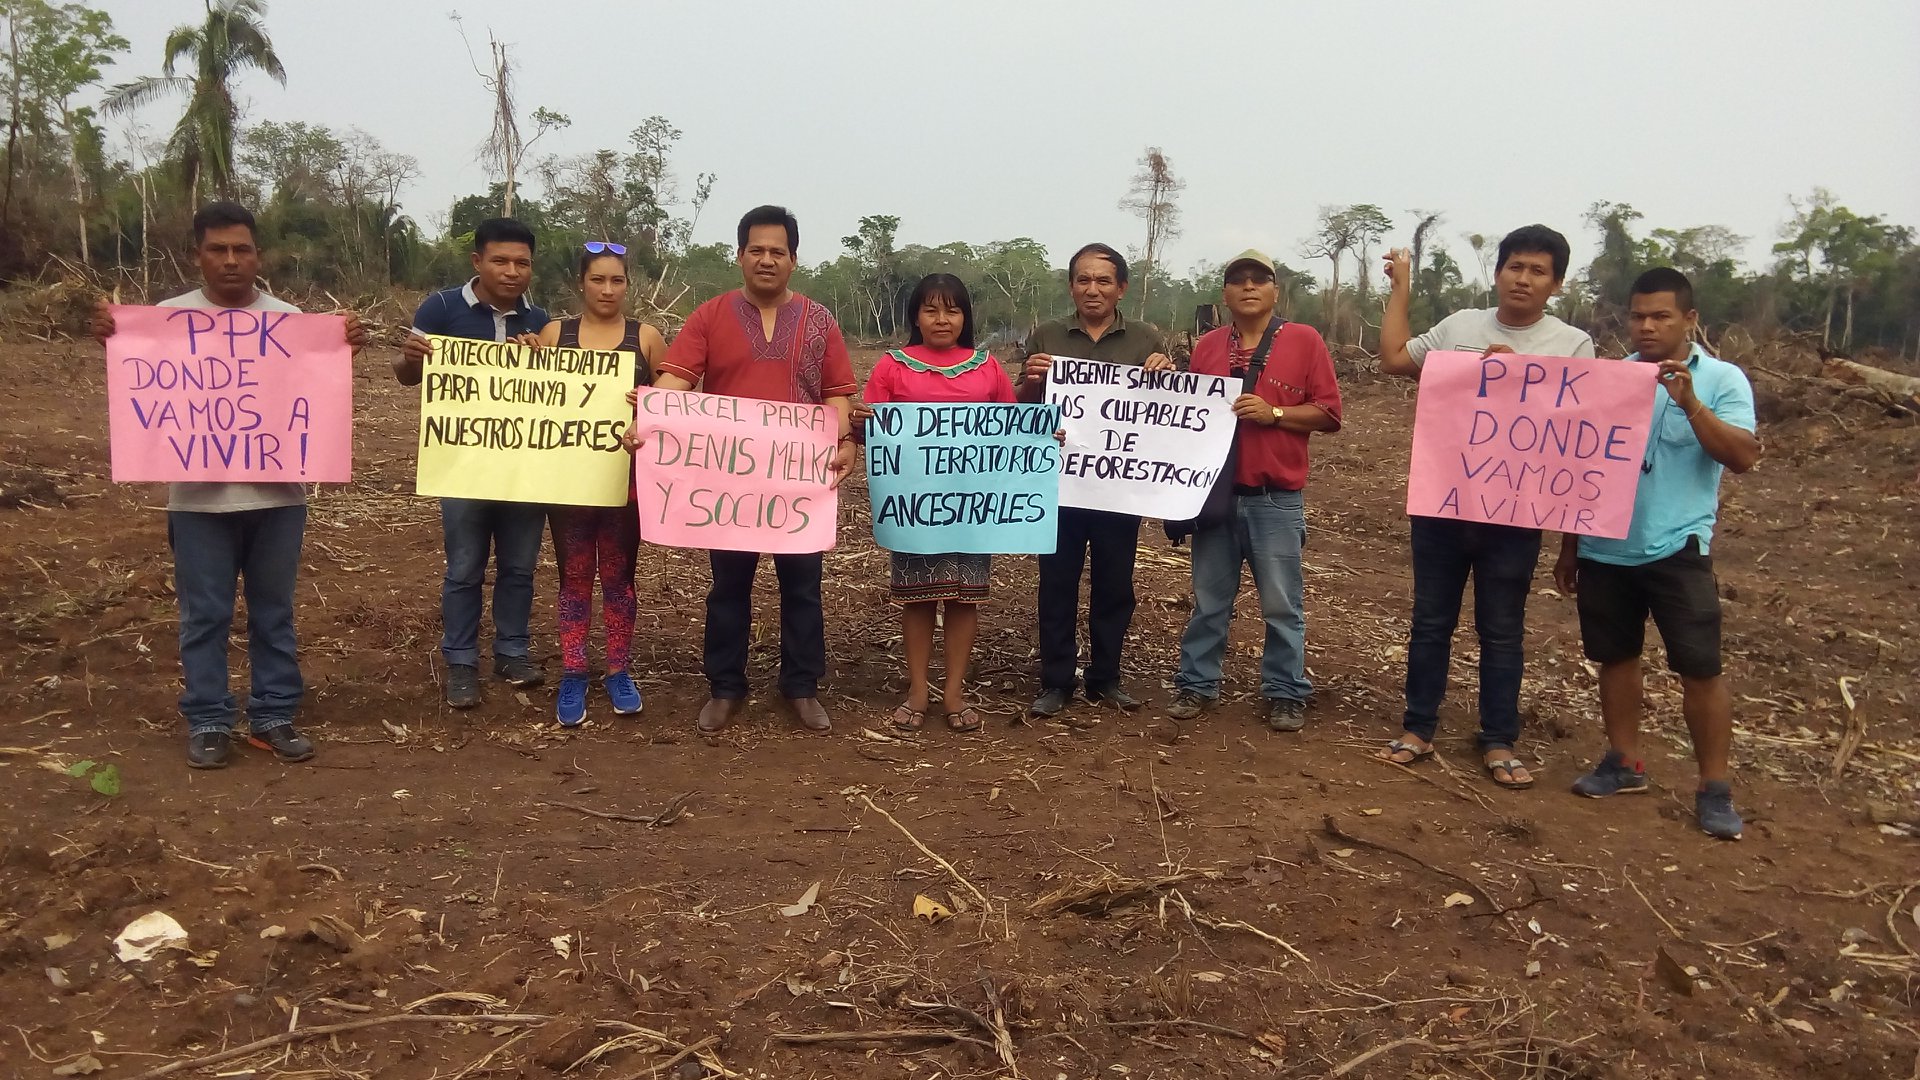 Shipibo-Conibo people defend their territories from palm oil in the Peruvian Amazon